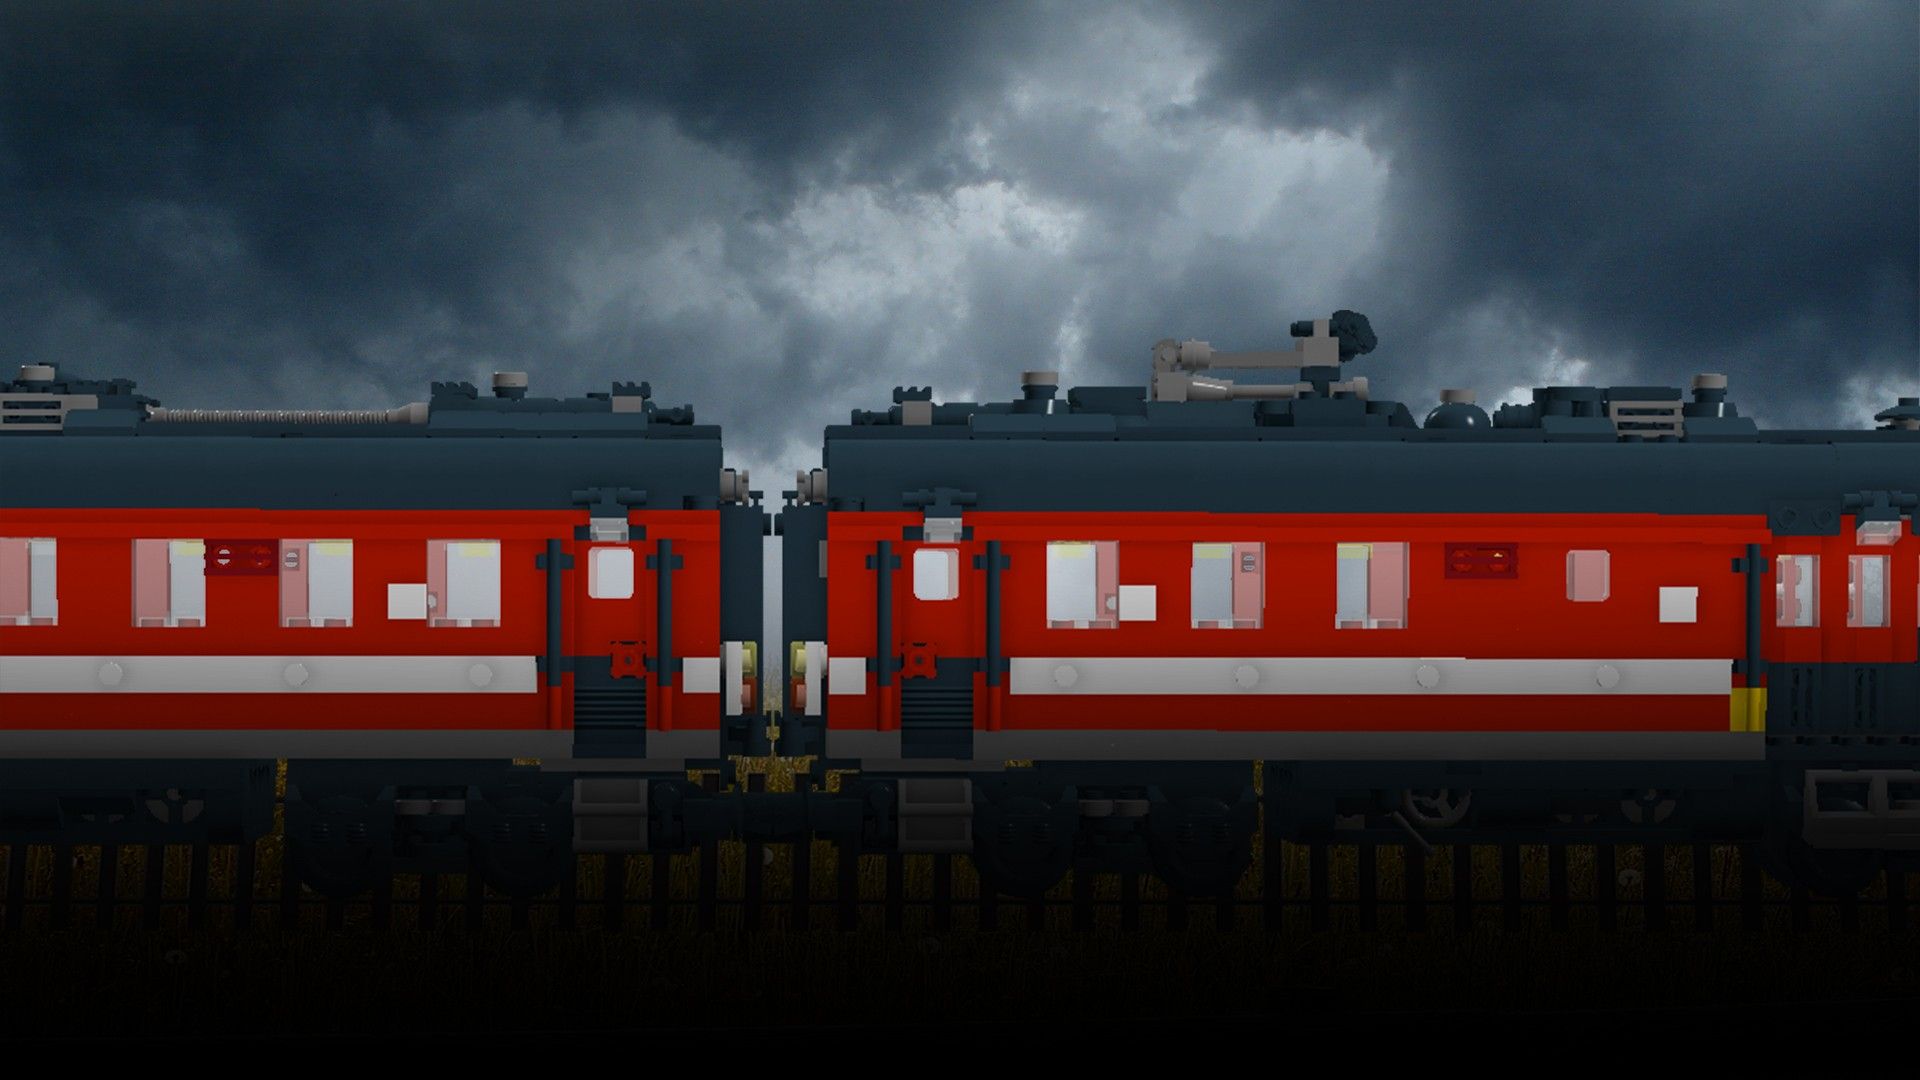 Train HD Wallpaper 35116